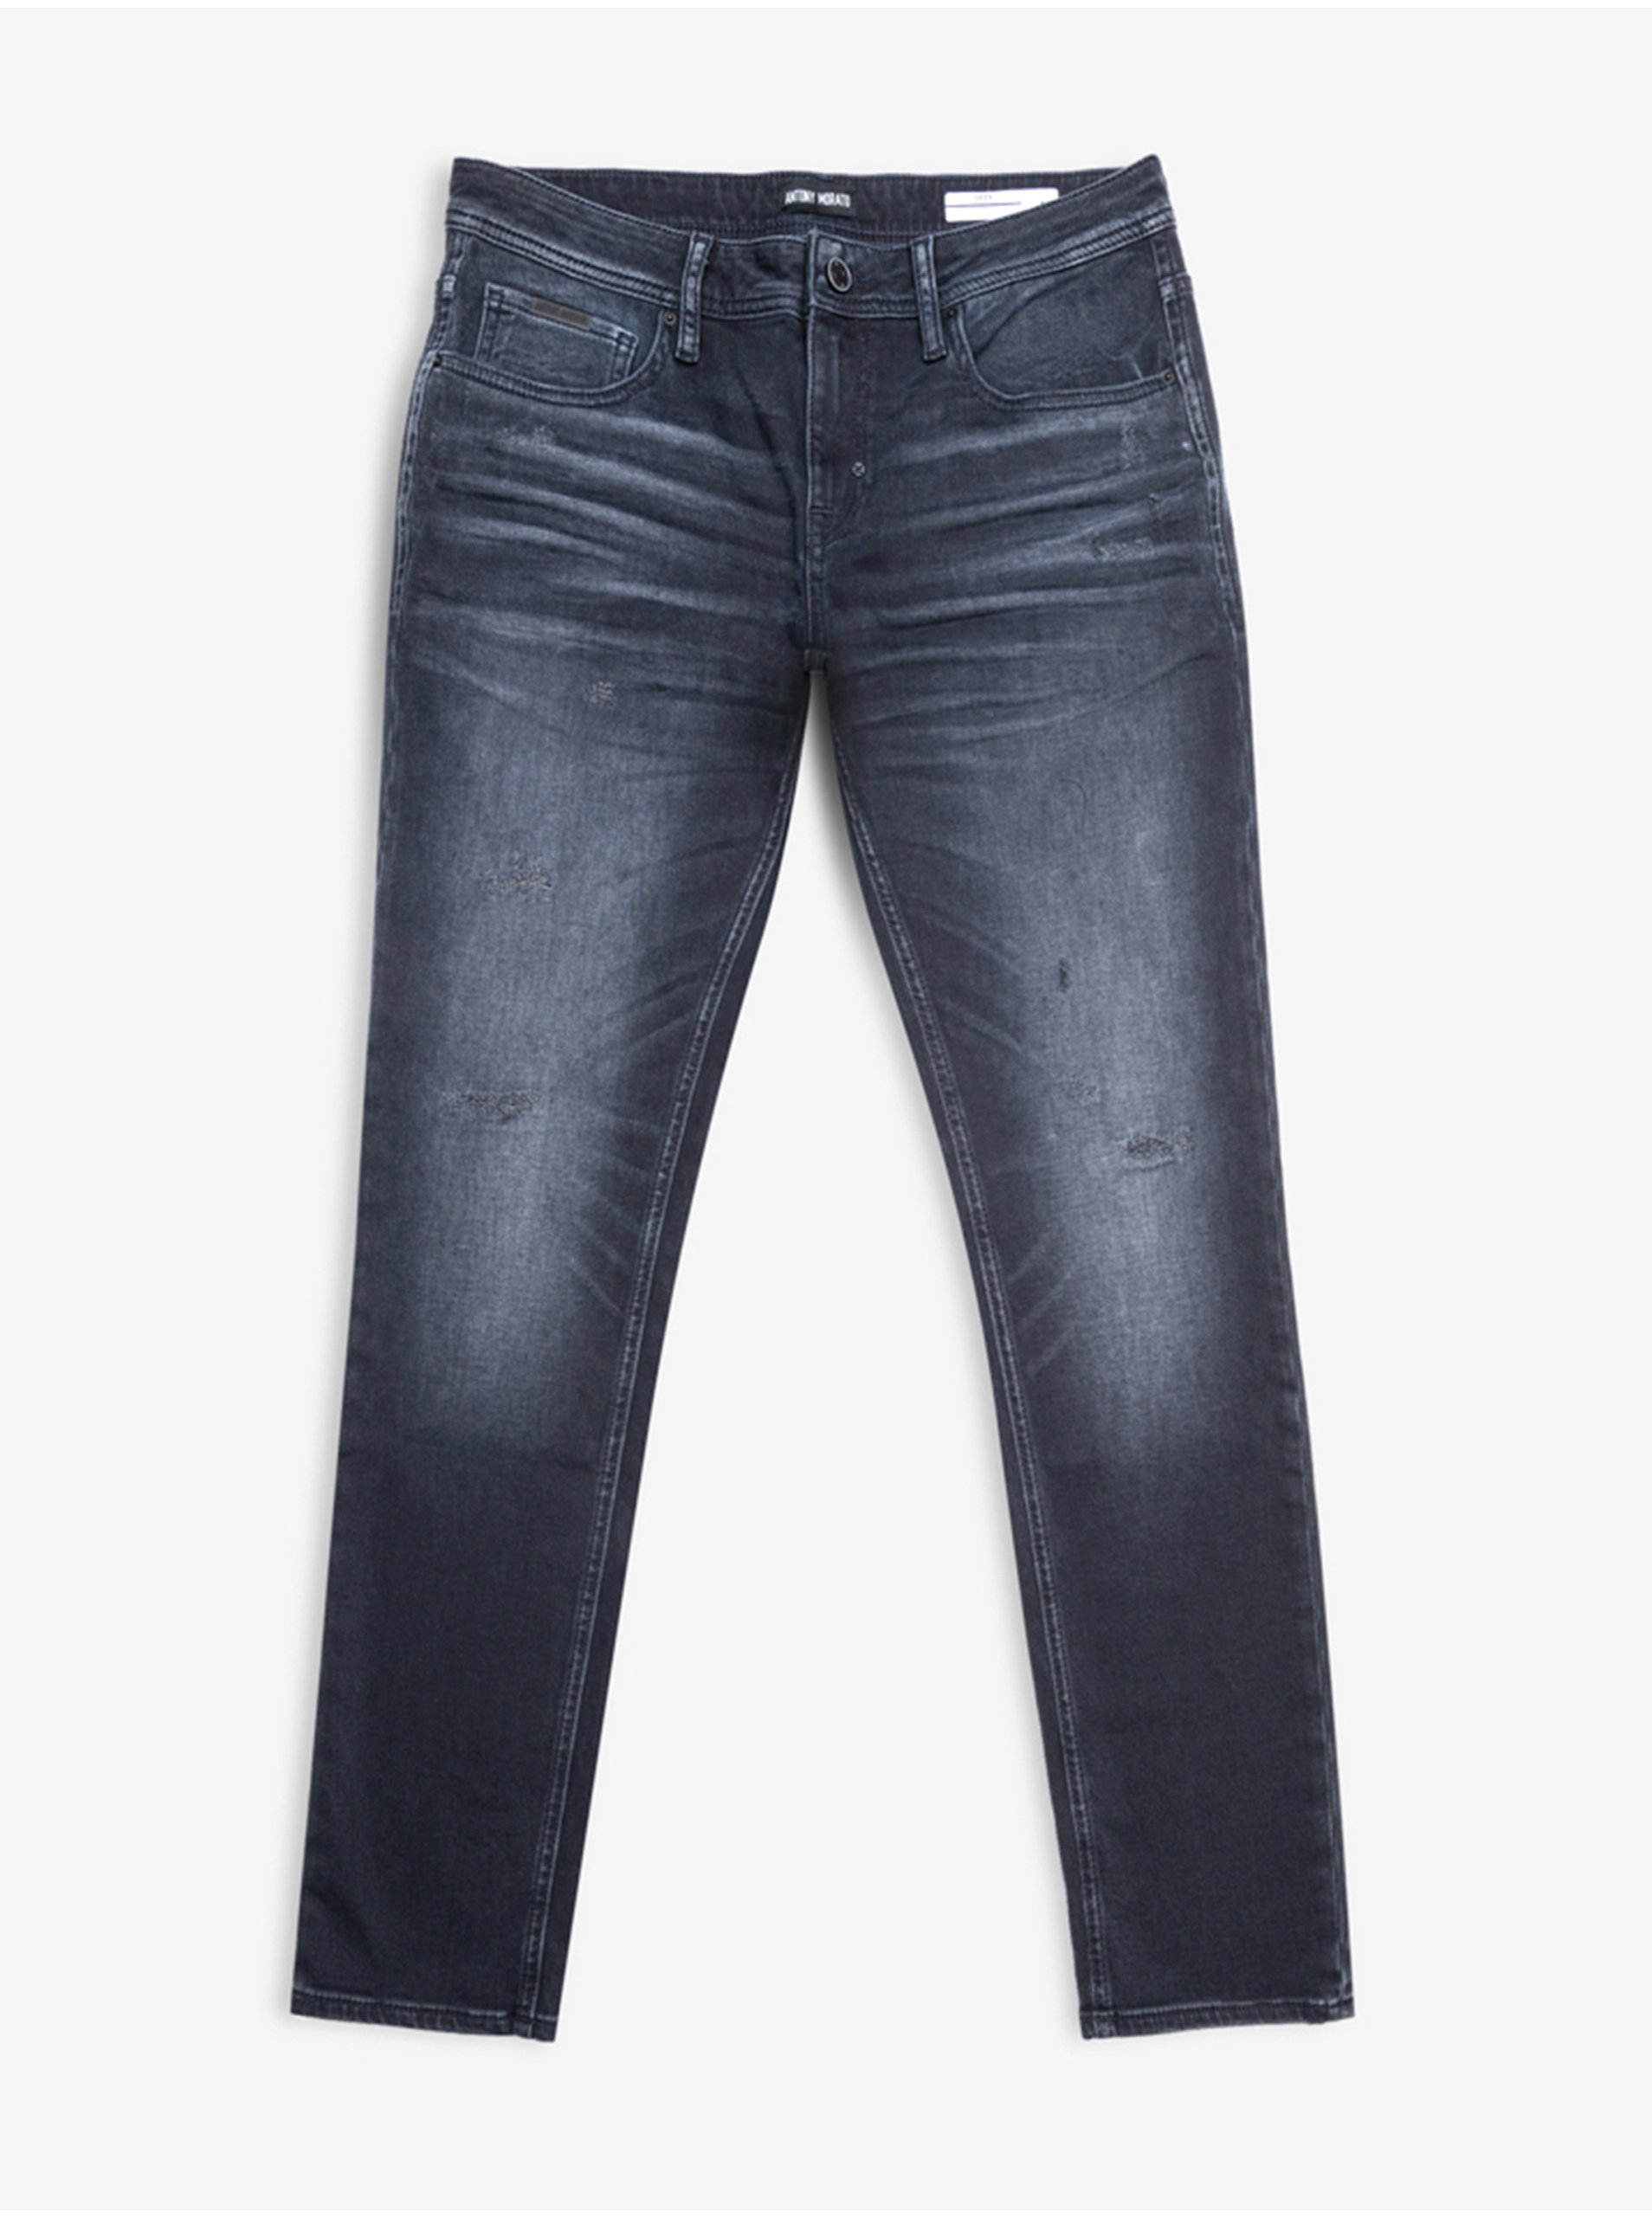 Dark Blue Straight Fit Jeans Antony Morato - Mens